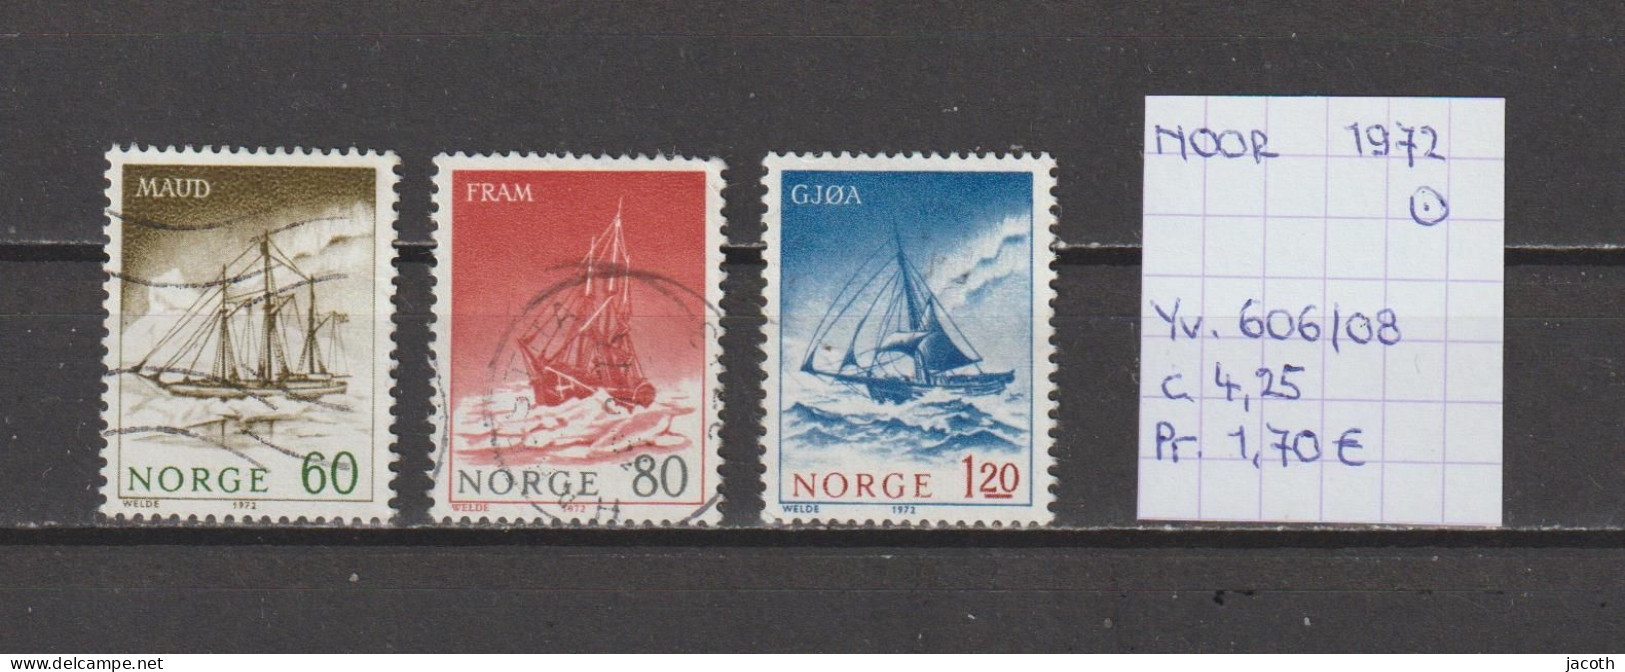 (TJ) Noorwegen 1972 - YT 606/08 (gest./obl./used) - Used Stamps